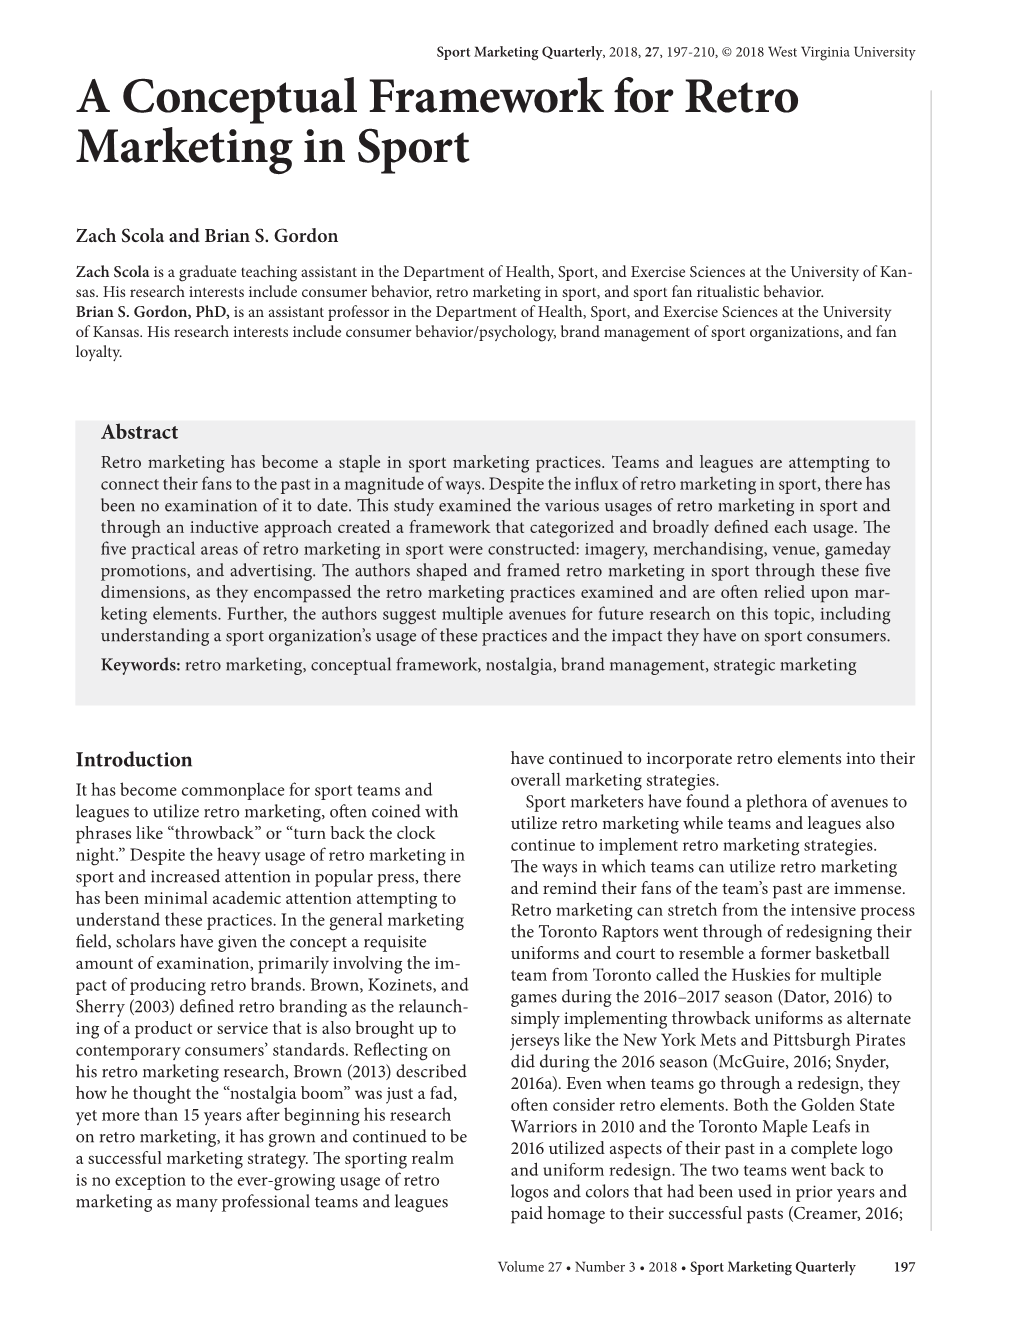 A Conceptual Framework for Retro Marketing in Sport